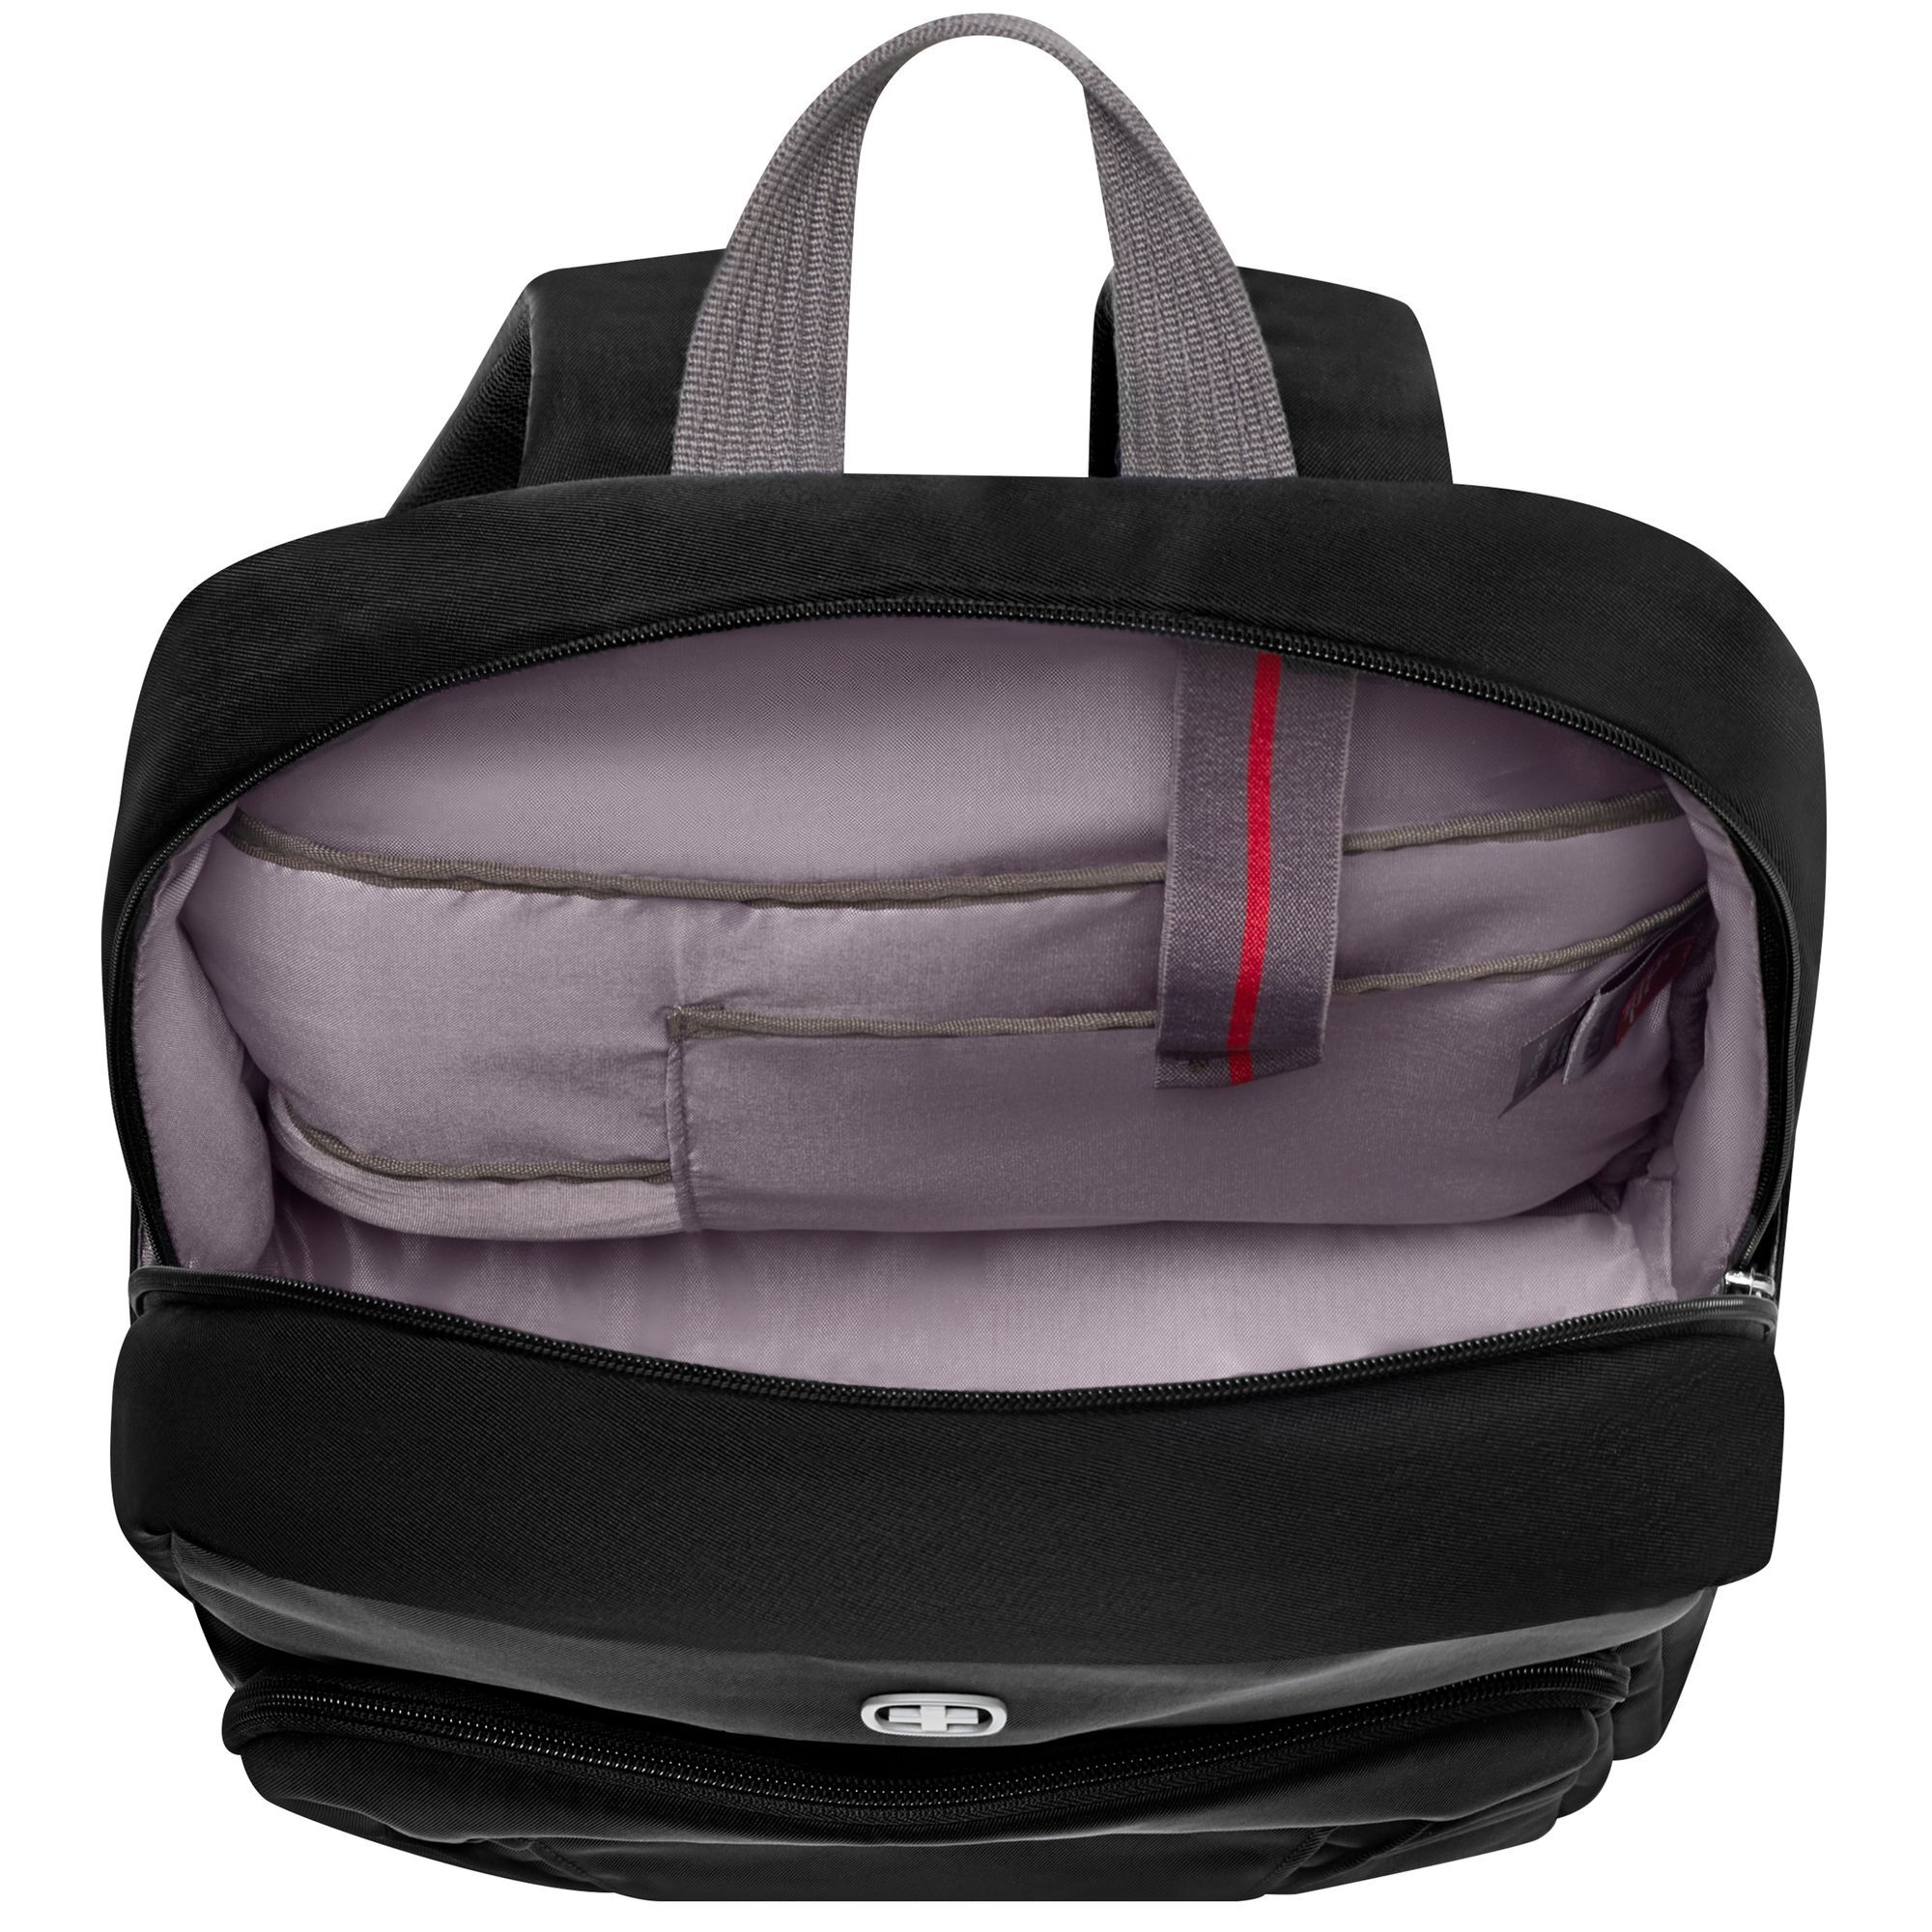 Рюкзак Wenger Motion 42 cm Laptopfach, шикарный черный рюкзак wenger mx reload 14 42 cm laptopfach цвет heather grey